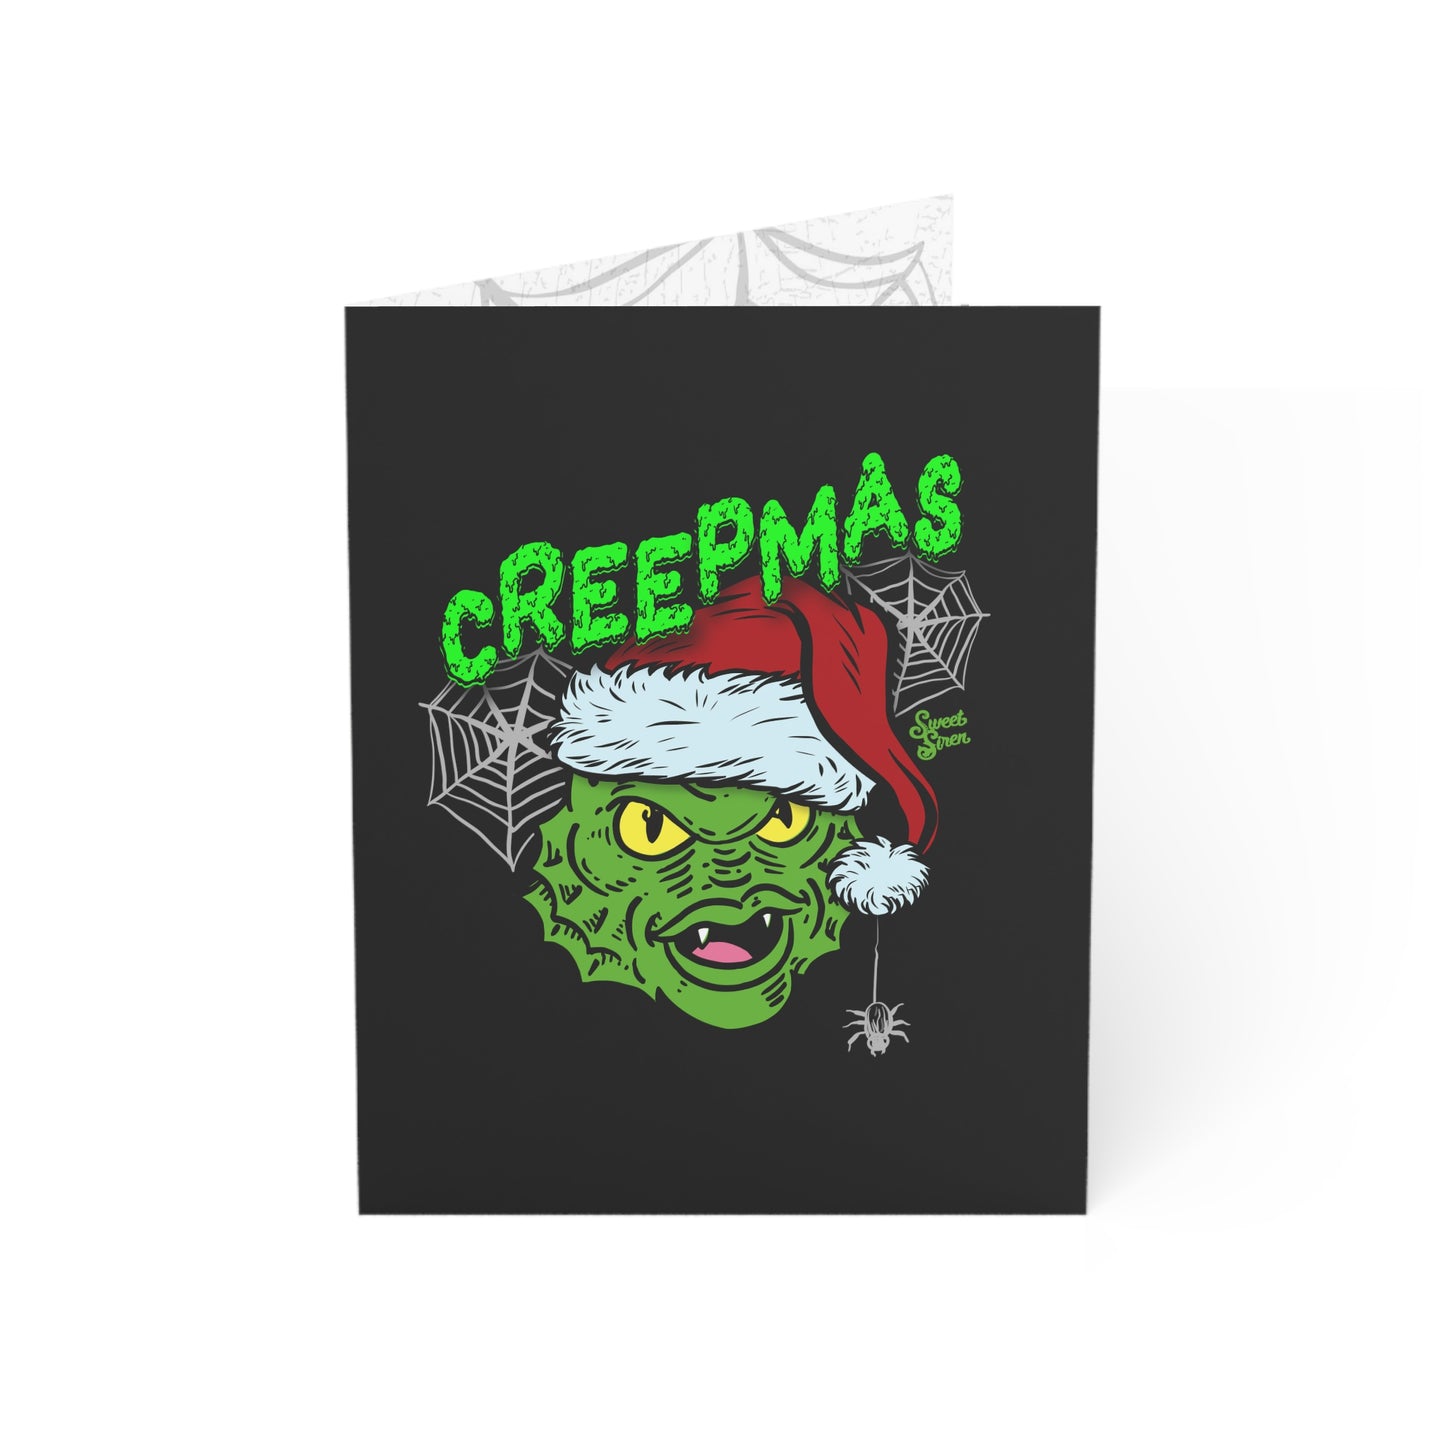 Creepmas Creature  - Greeting Cards (1, 10, 30, and 50pcs)